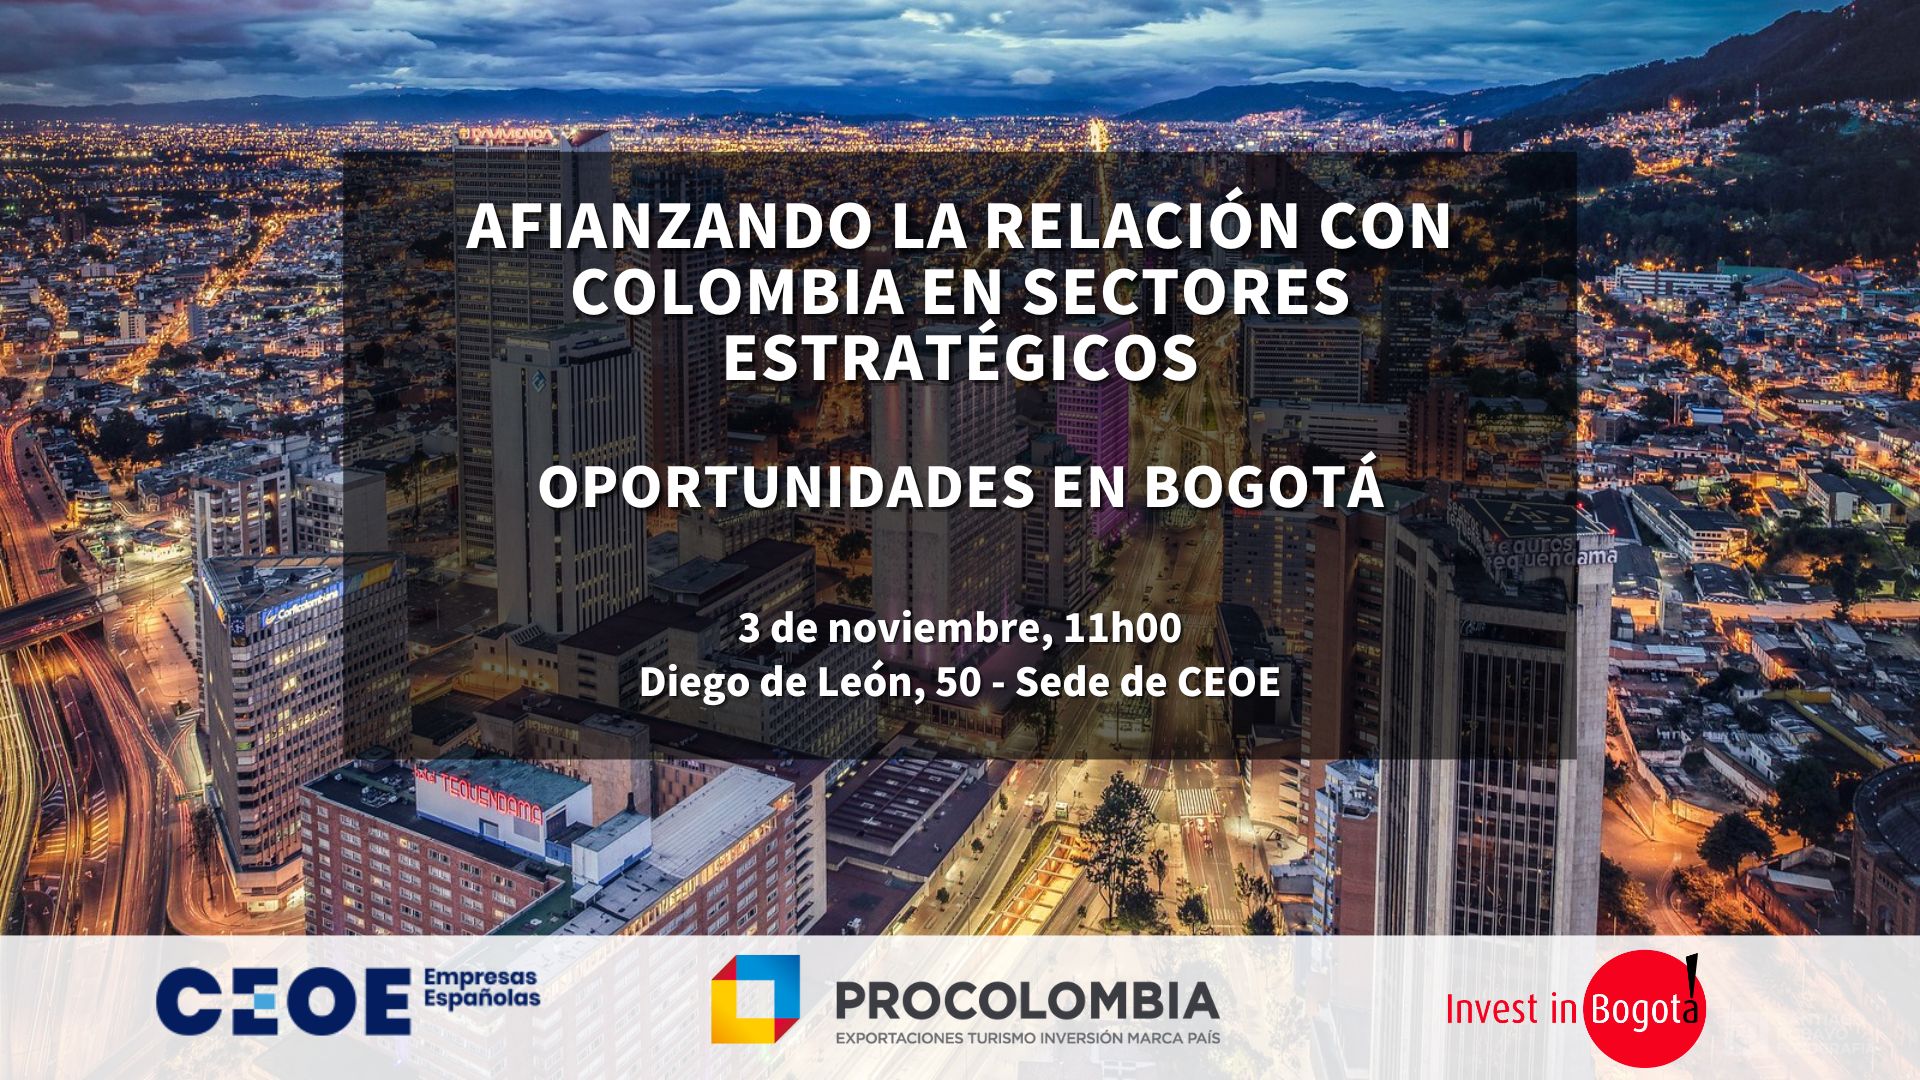 Invest ProColombia